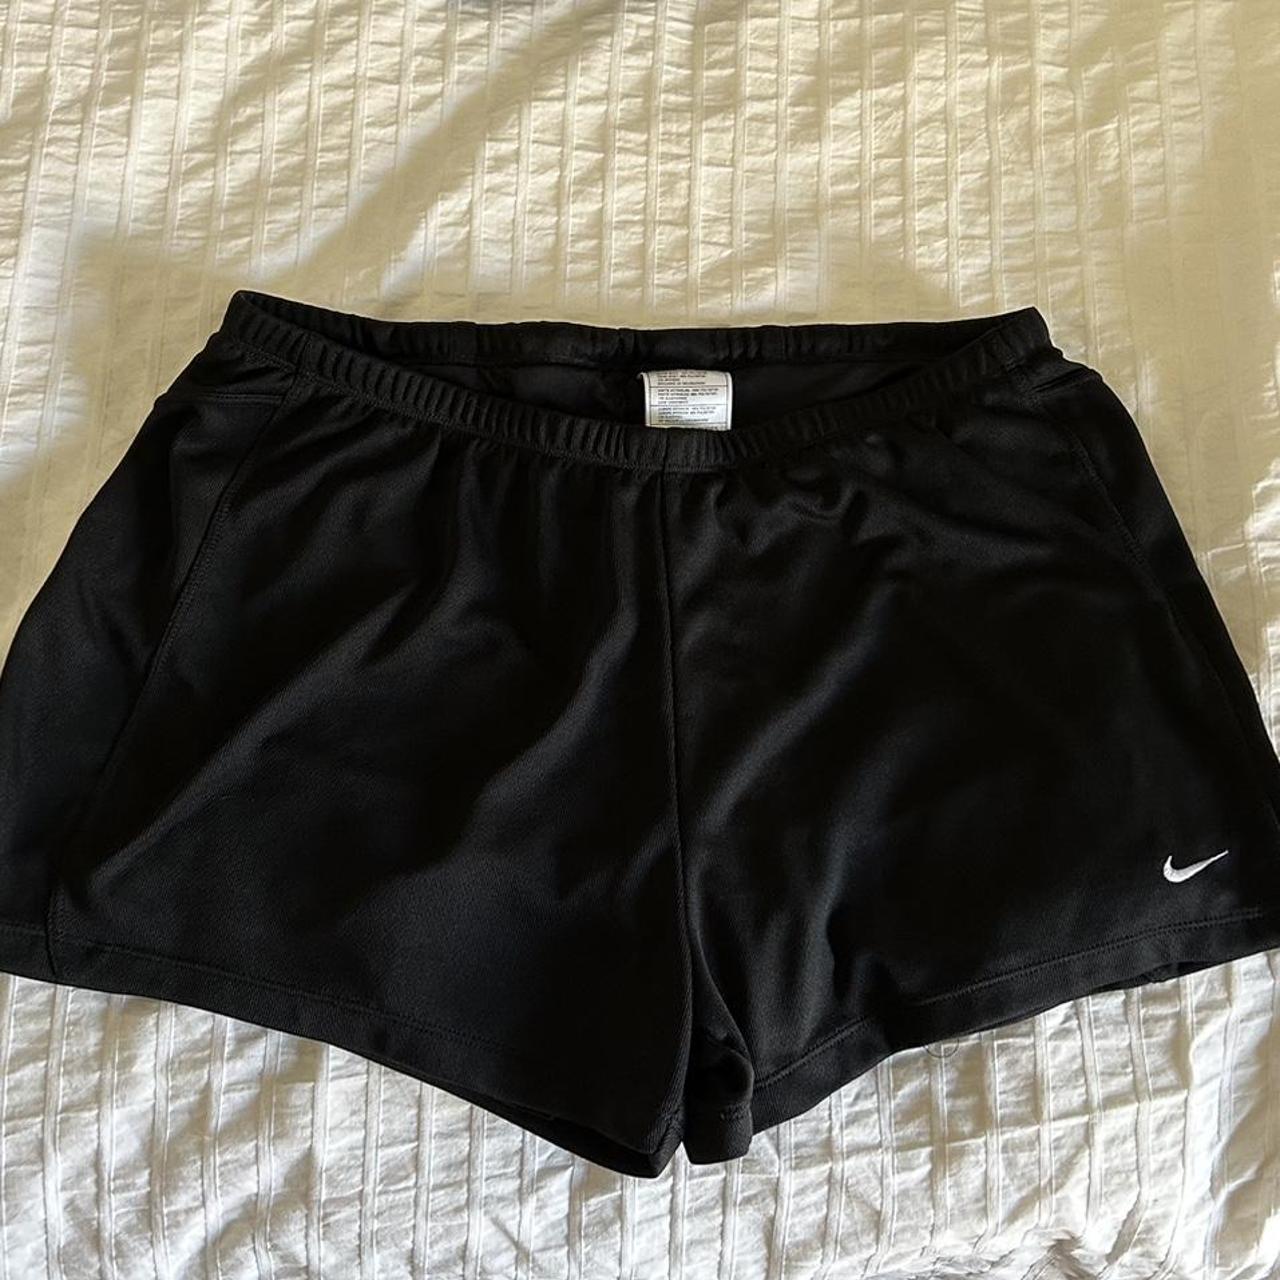 Nike Women's Black and White Shorts | Depop